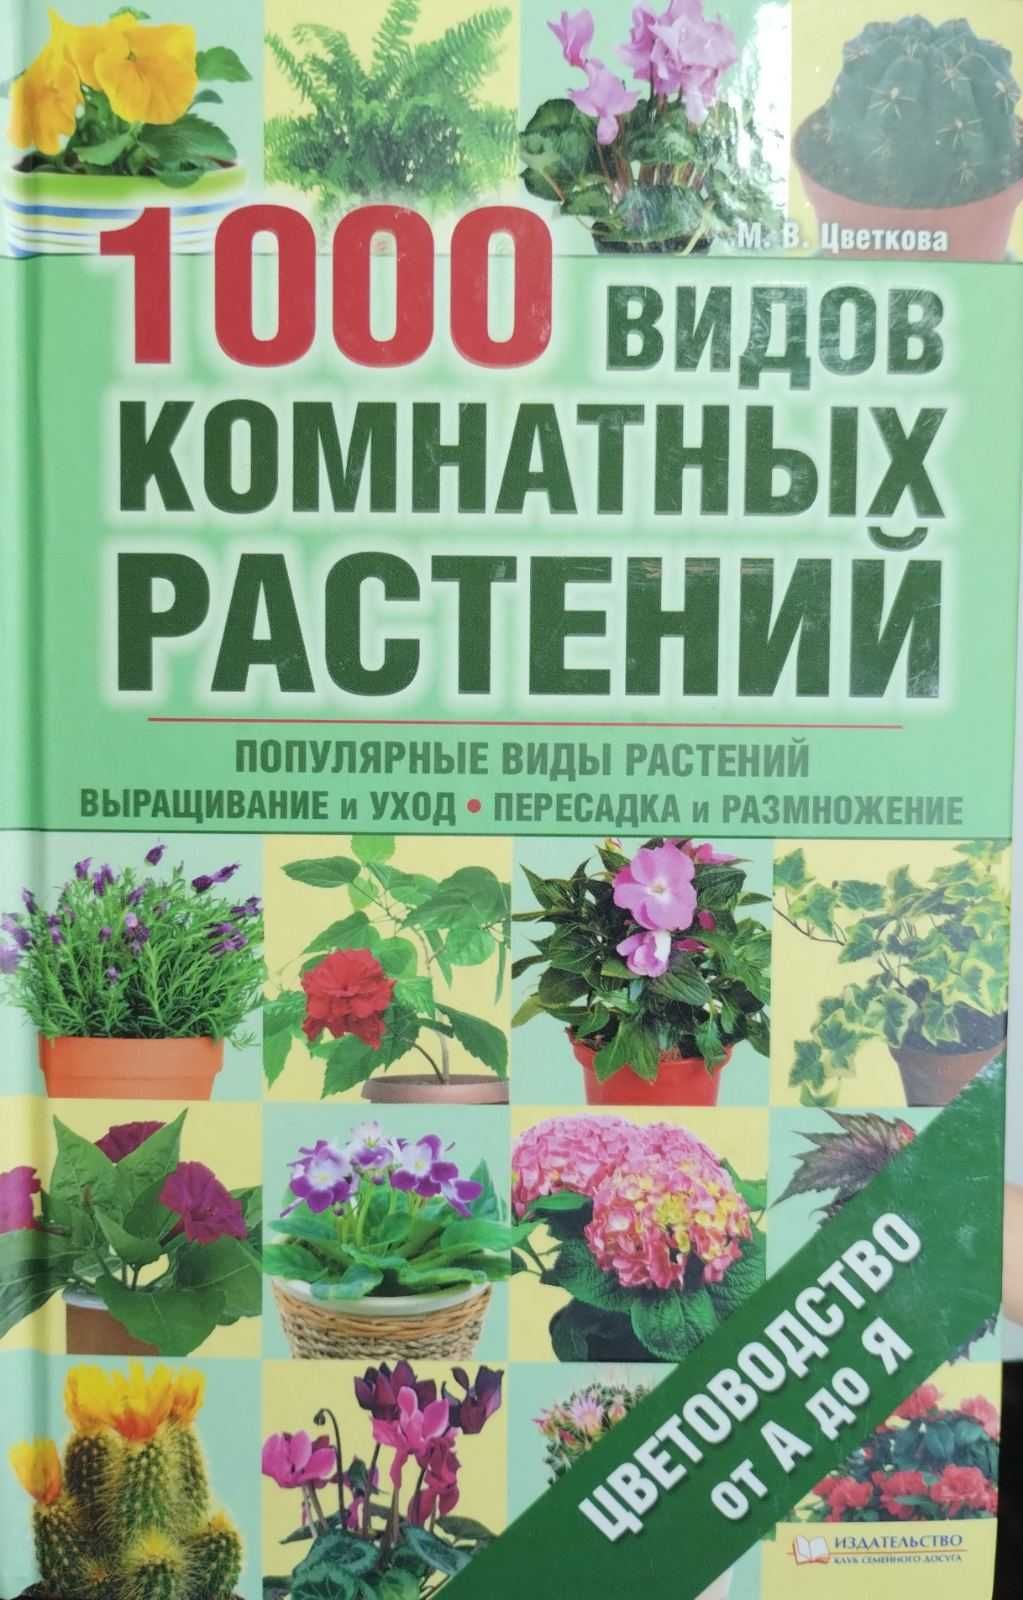 1000 видов комнатных растений. Цветоводство от А до Я. М. Цветкова